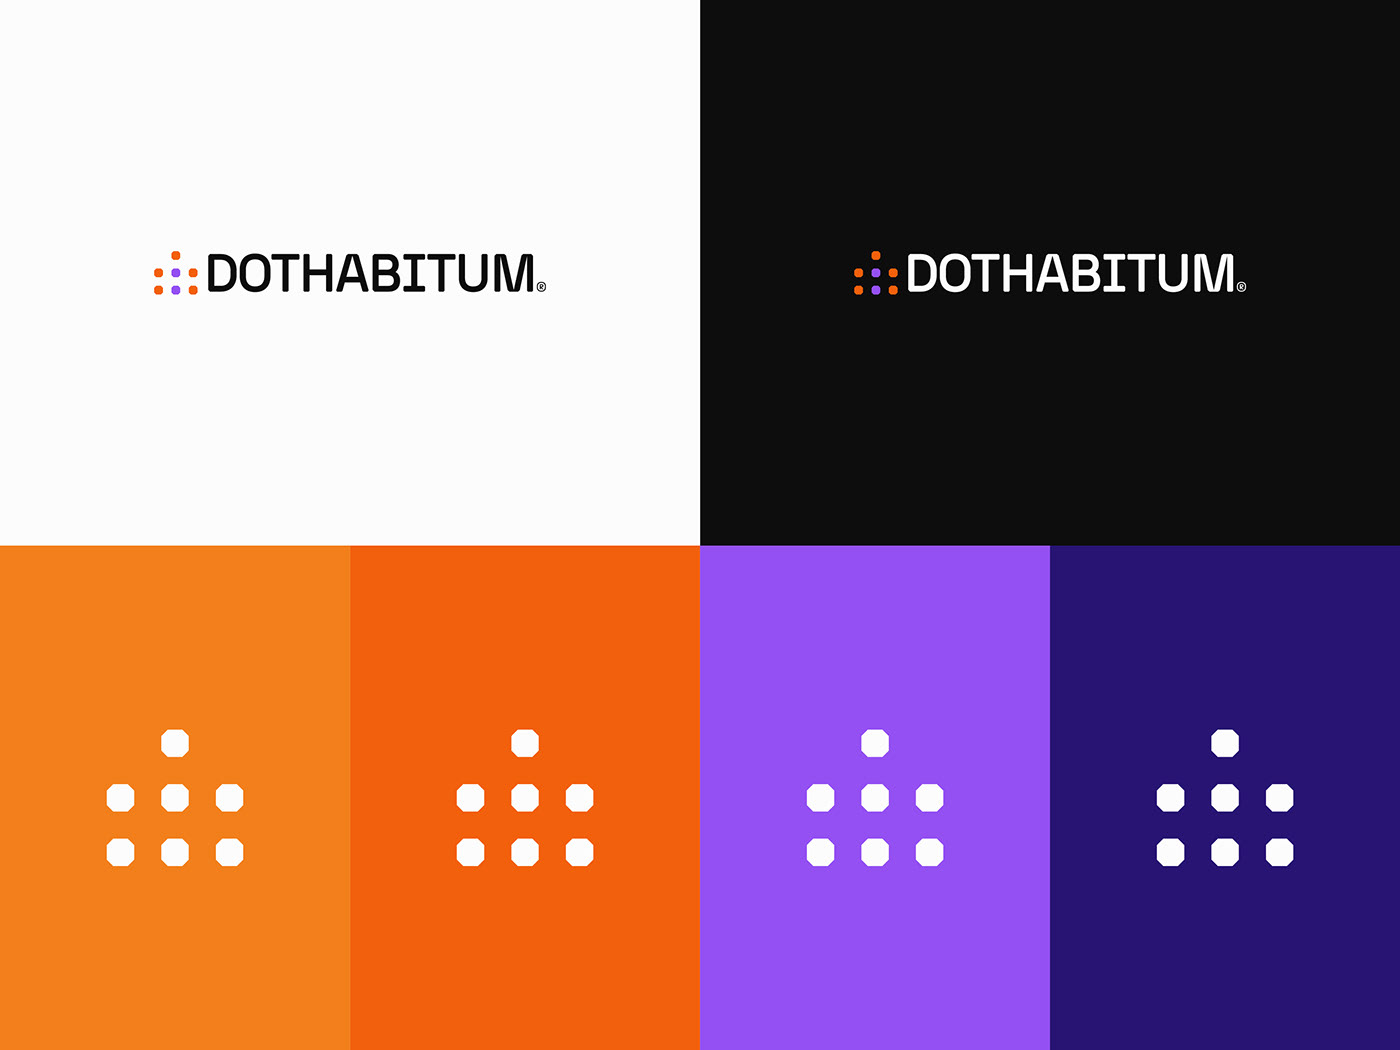 Logo design of Dothabitum in different backgrounds.